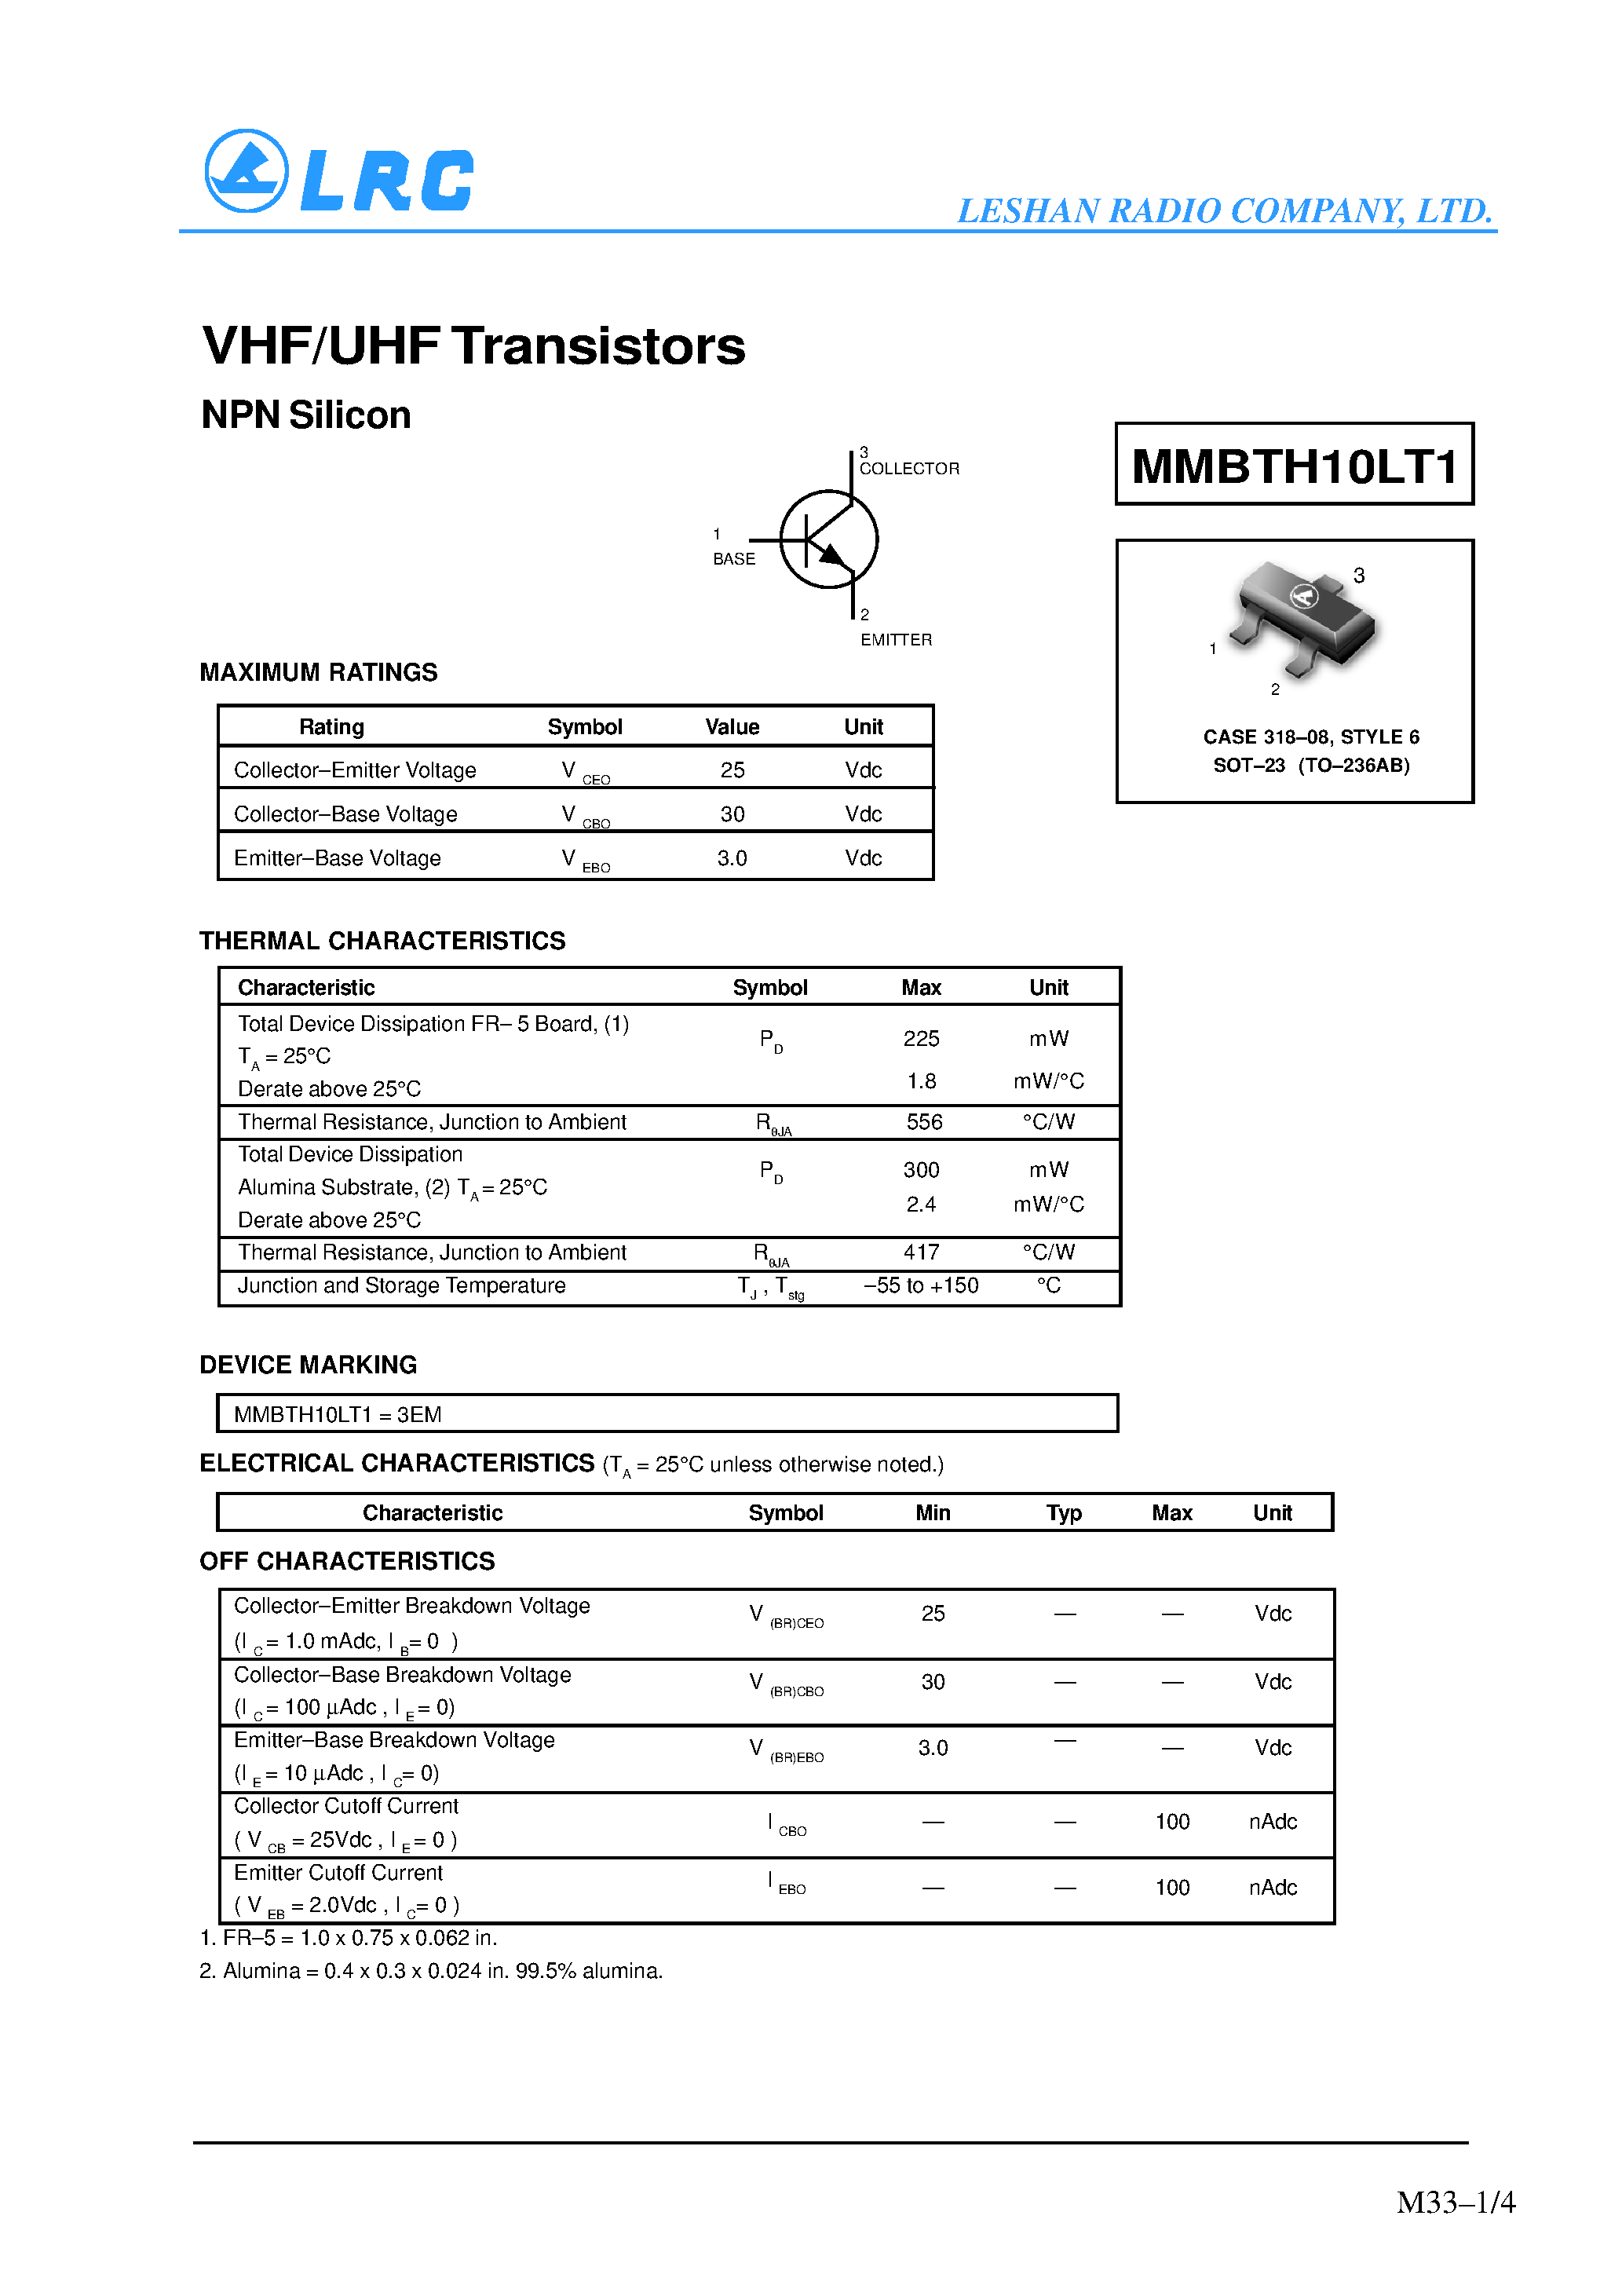 Datasheet MMBTH10LT1 - VHF/UHF Transistors(NPN Silicon) page 1